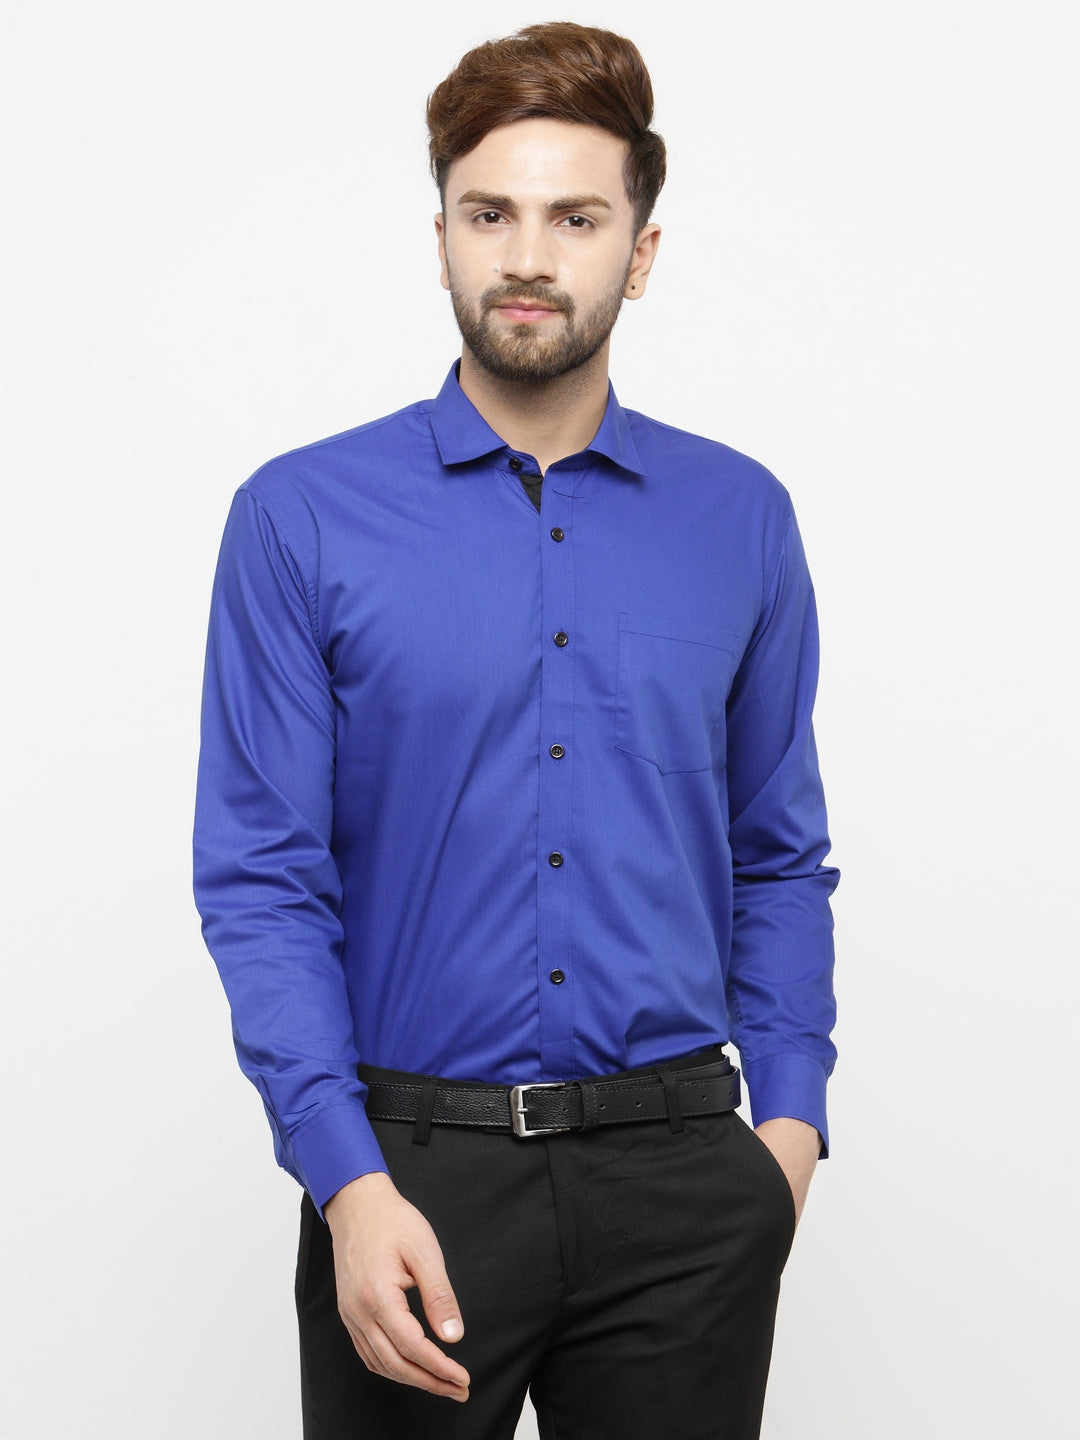 Men's Royal Blue Formal Shirt with black detailing ( SF 411Royal-Blue ) - Jainish